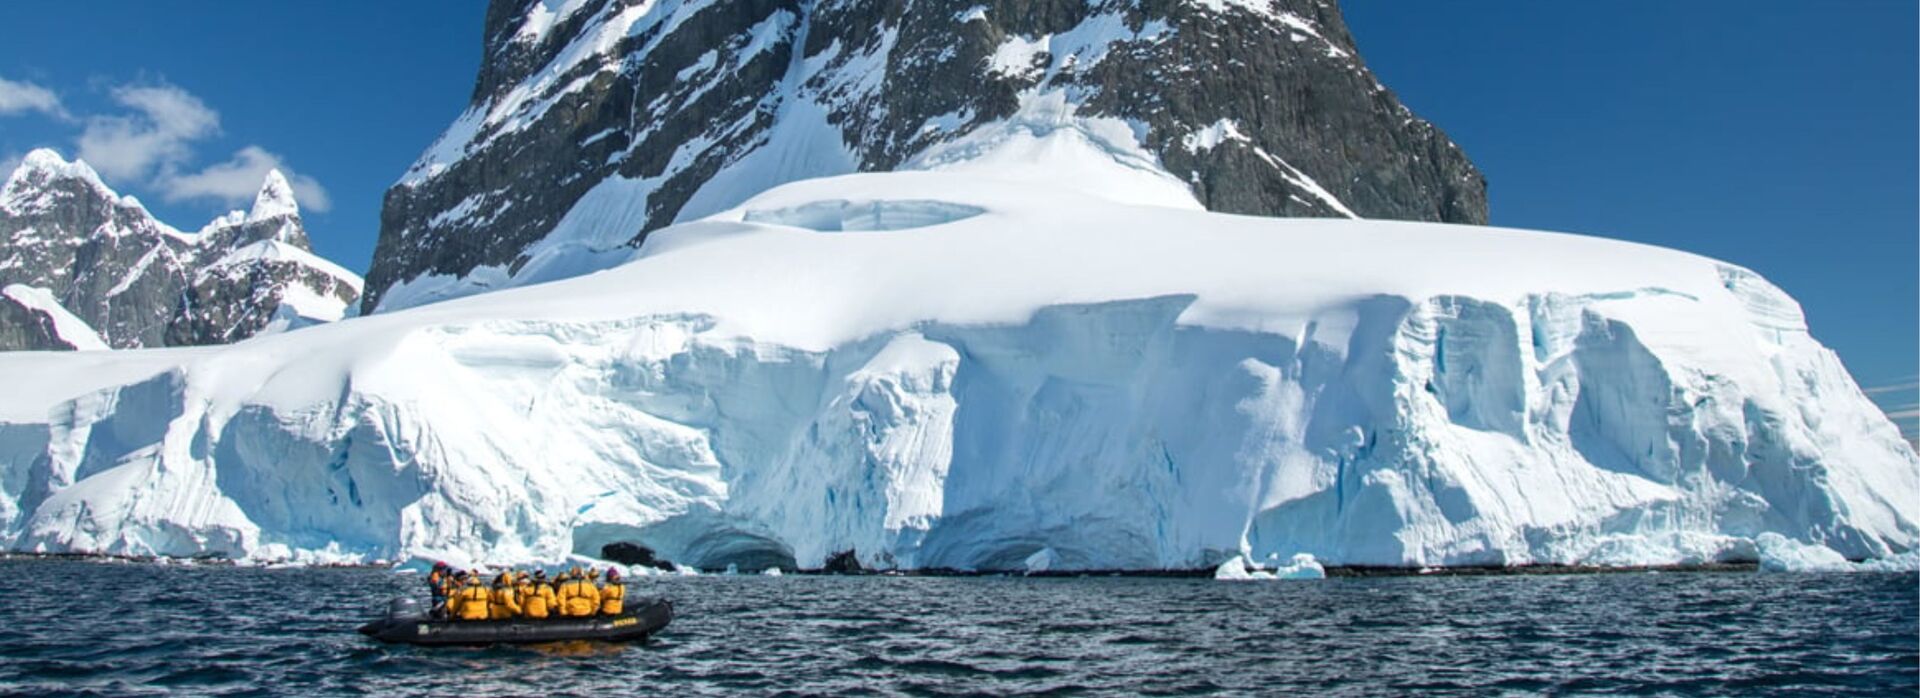 Antarctica Artic Polar bears penguins cruise wildlife northern lights travel guide  